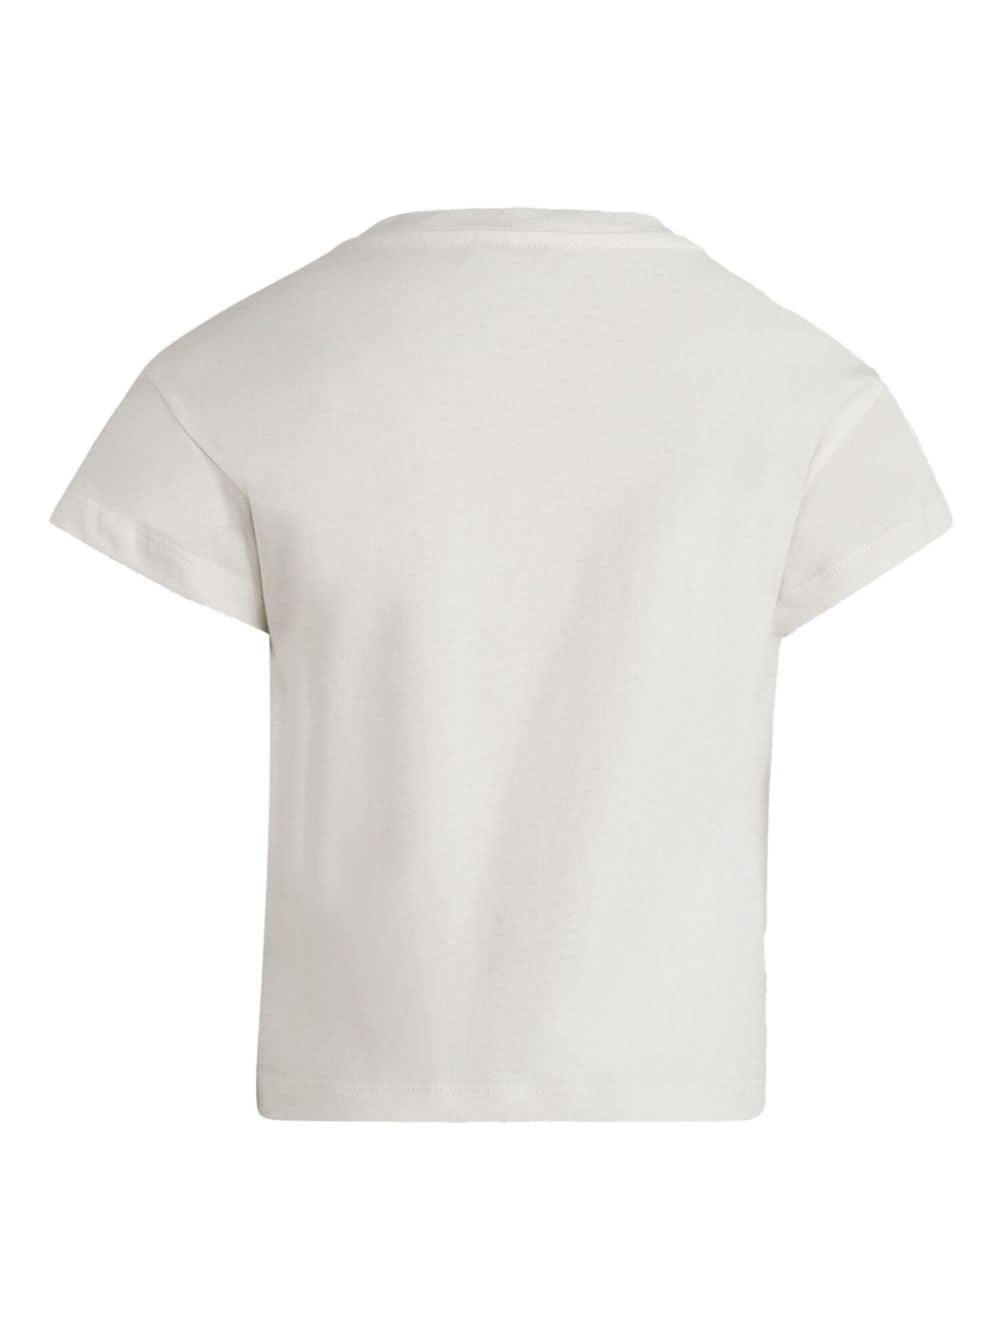 T-shirt fille blanc/multicolore